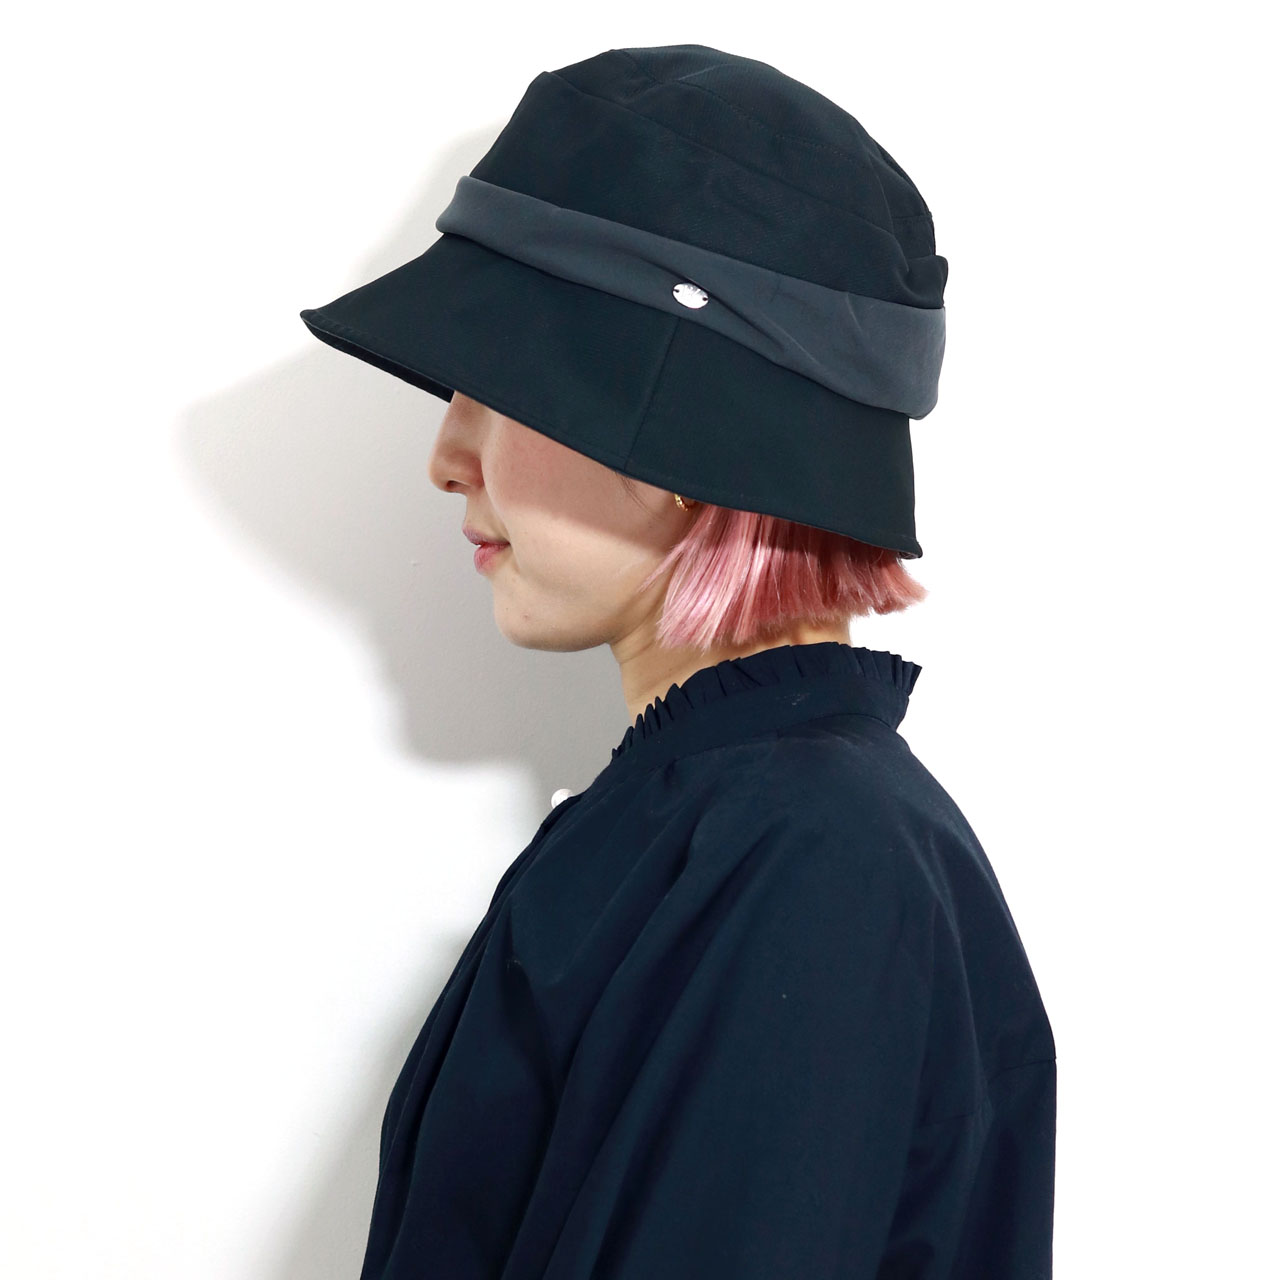 HIROKO KOSHINO 婦人ファッションブランド ハット ミセス コシノヒロコ レディース帽子 セーラー ワンポイント 婦人 紫外線対策  手洗い可 ナイロン